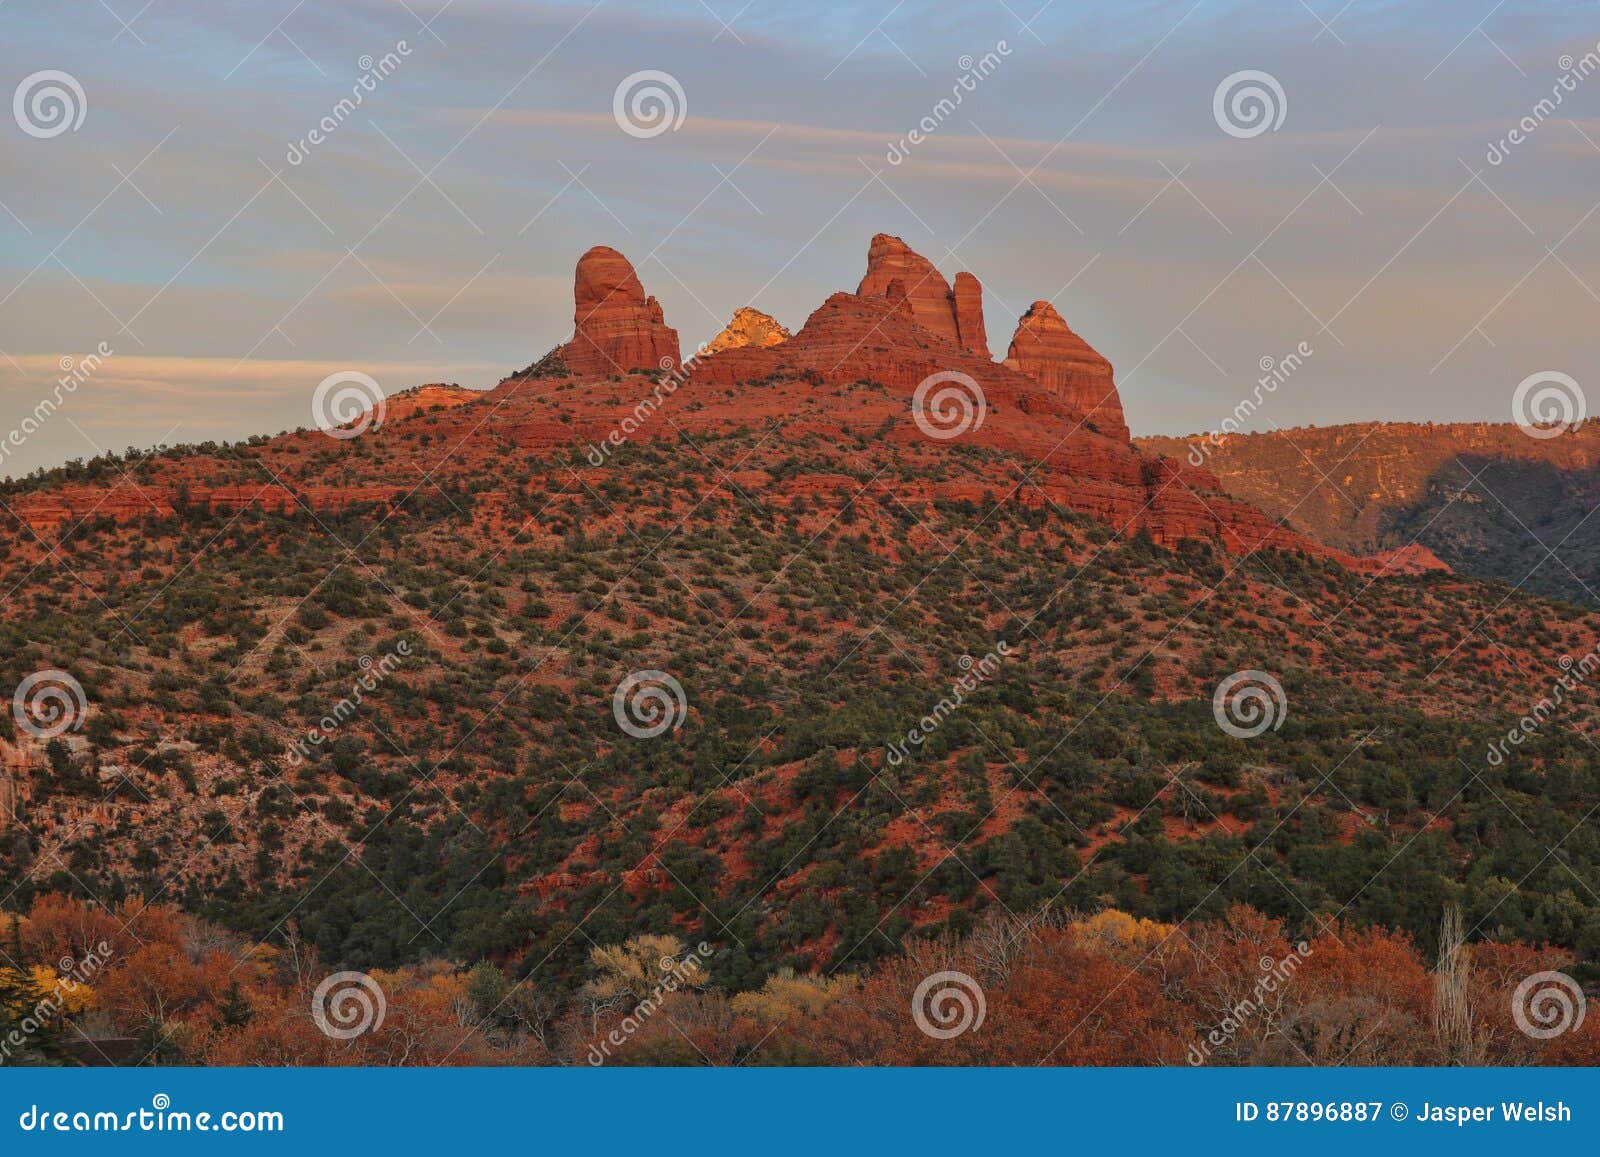 Arizona at Night Photography Prints Sedona Red Rocks Decor Southwestern 